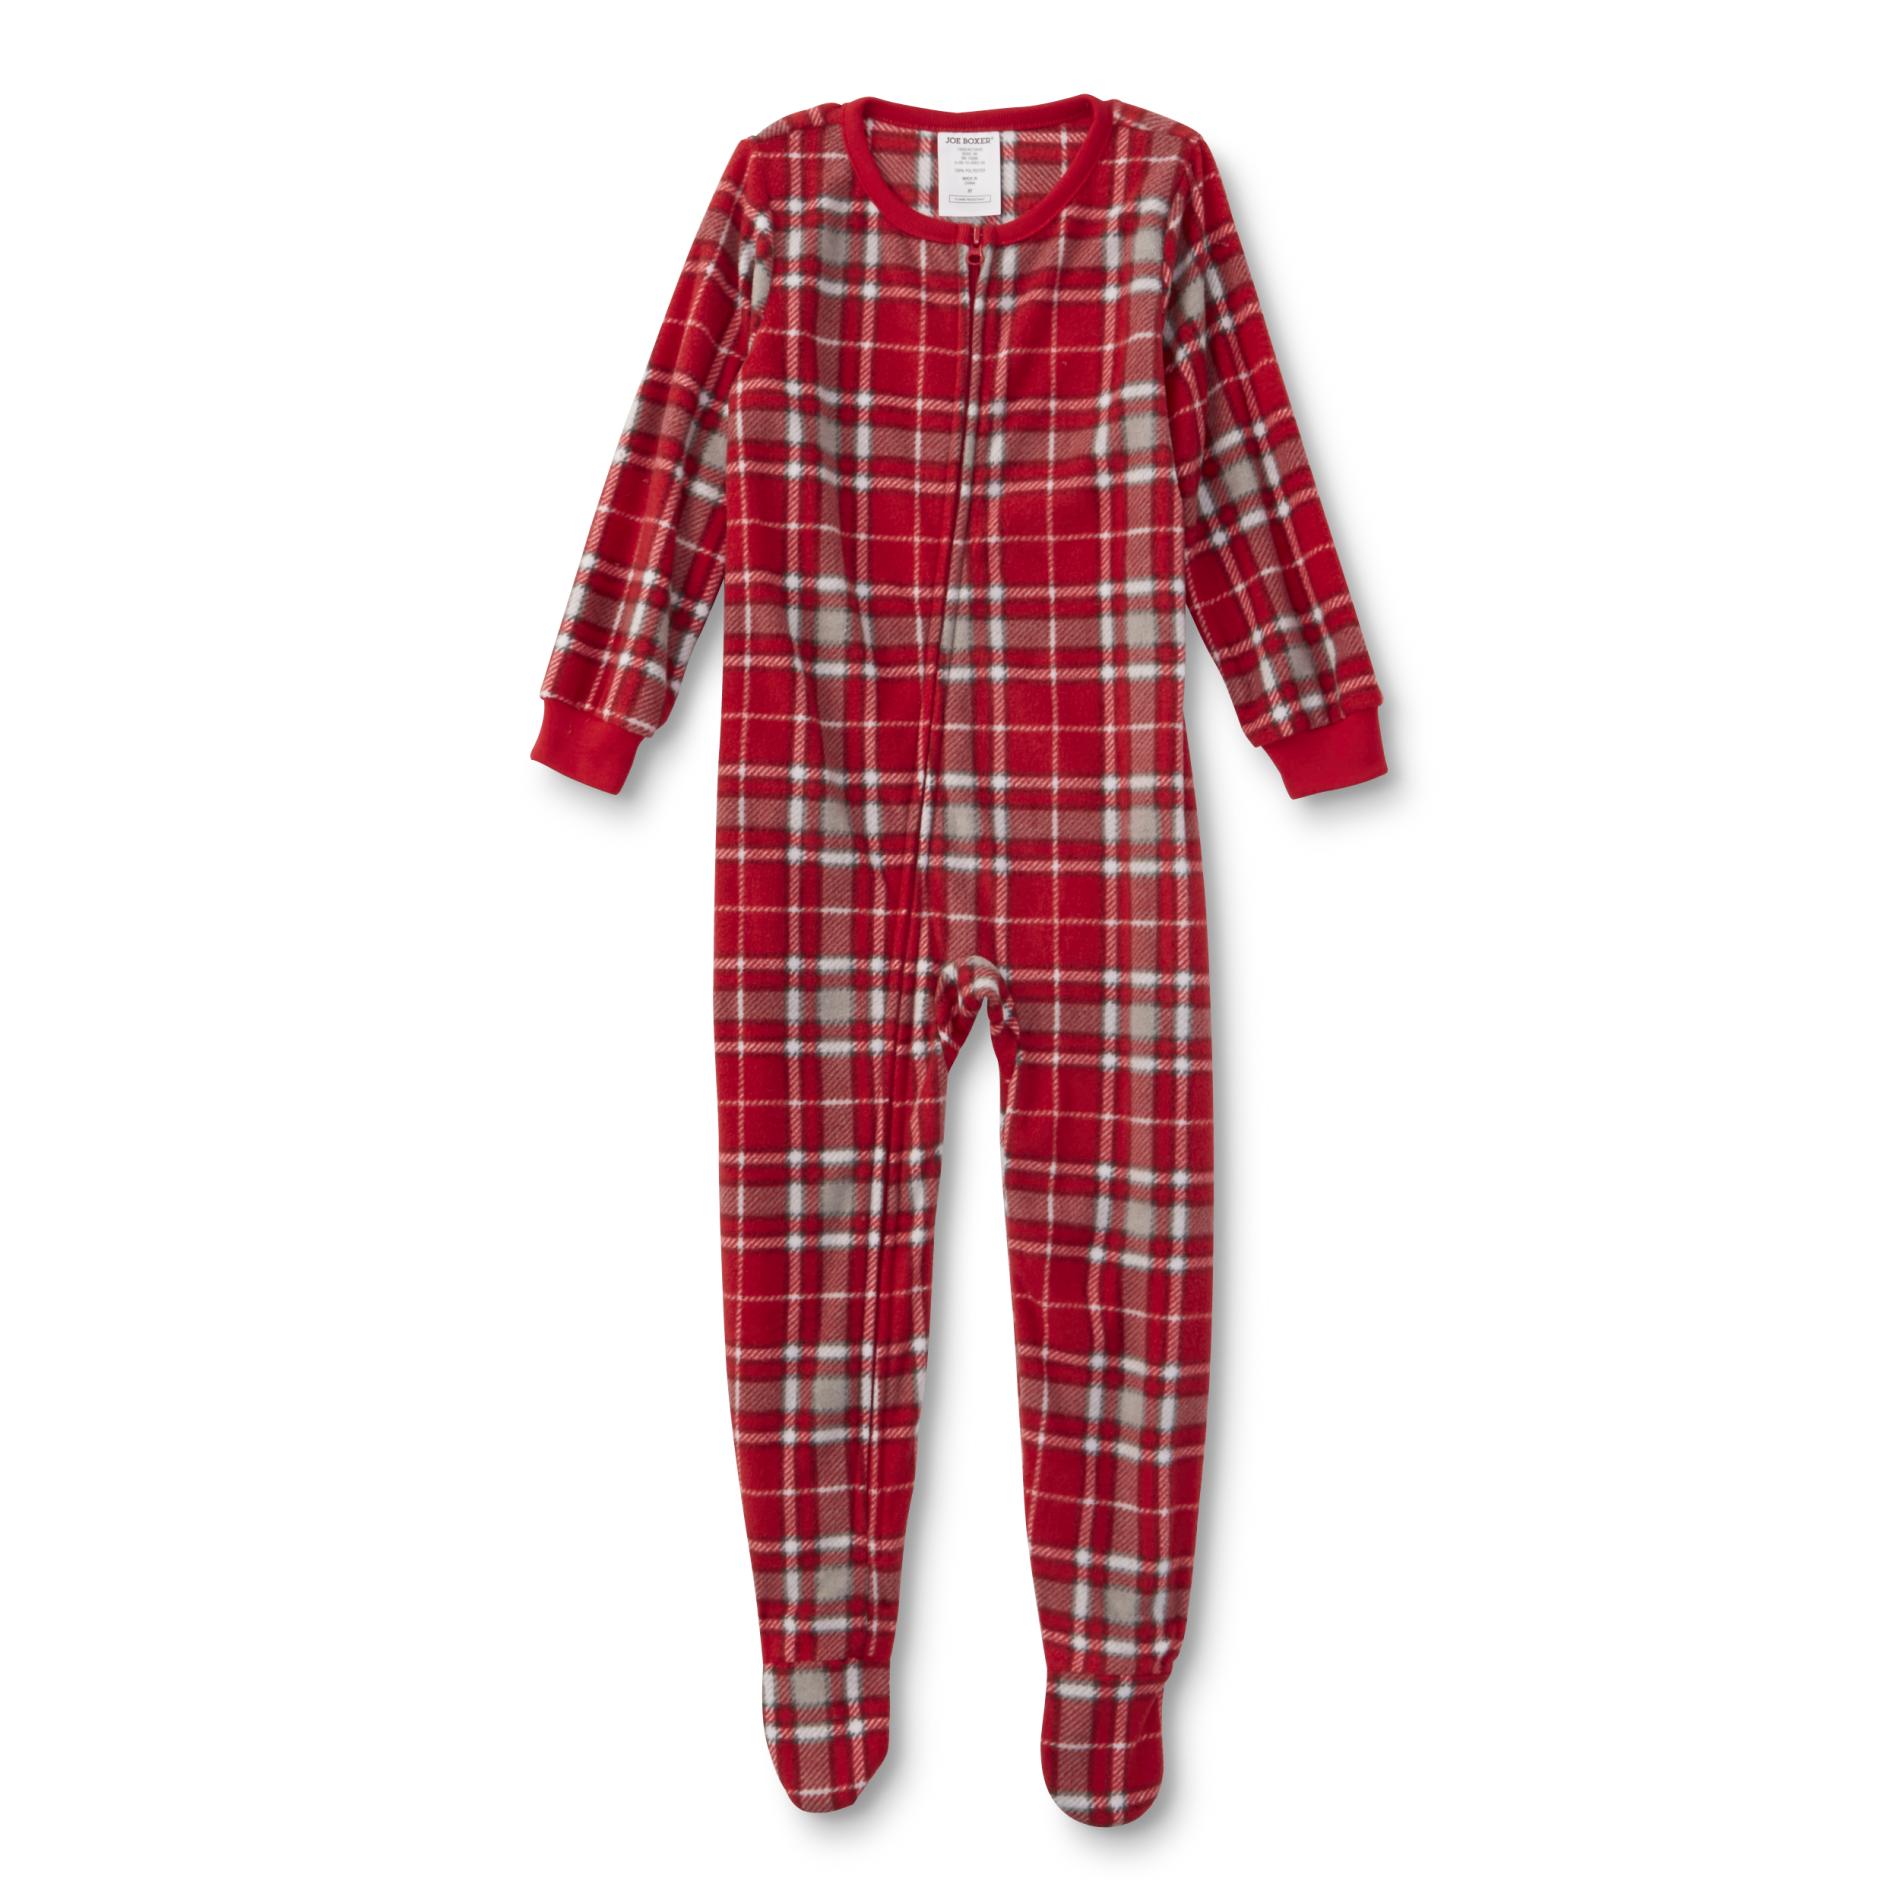 Joe Boxer Infant & Toddler's Christmas Sleeper Pajamas - Plaid